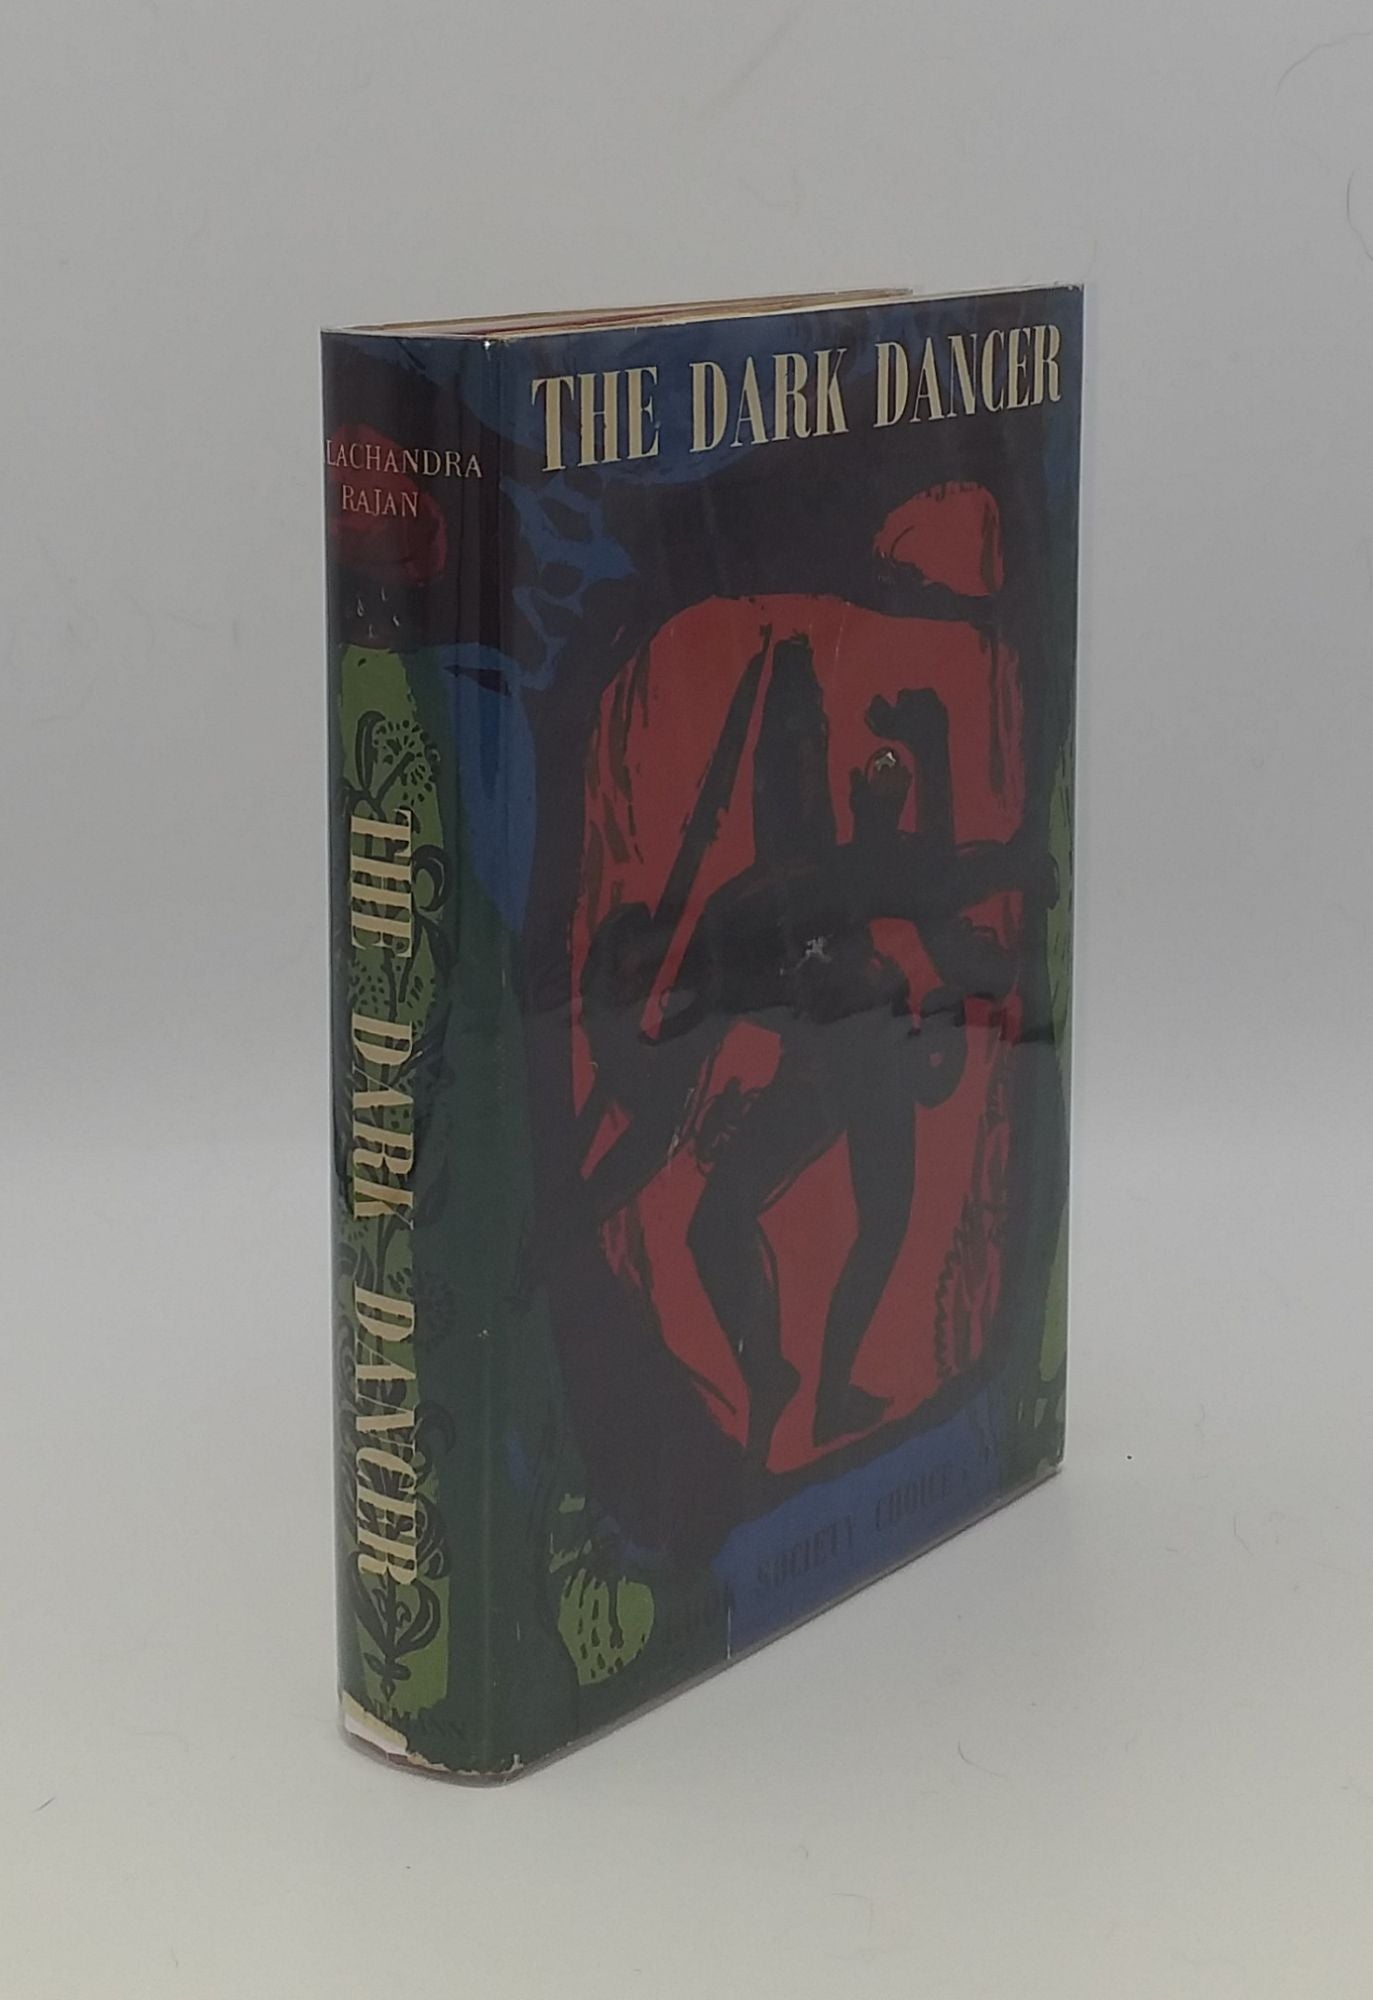 RAJAN Balachandra - The Dark Dancer